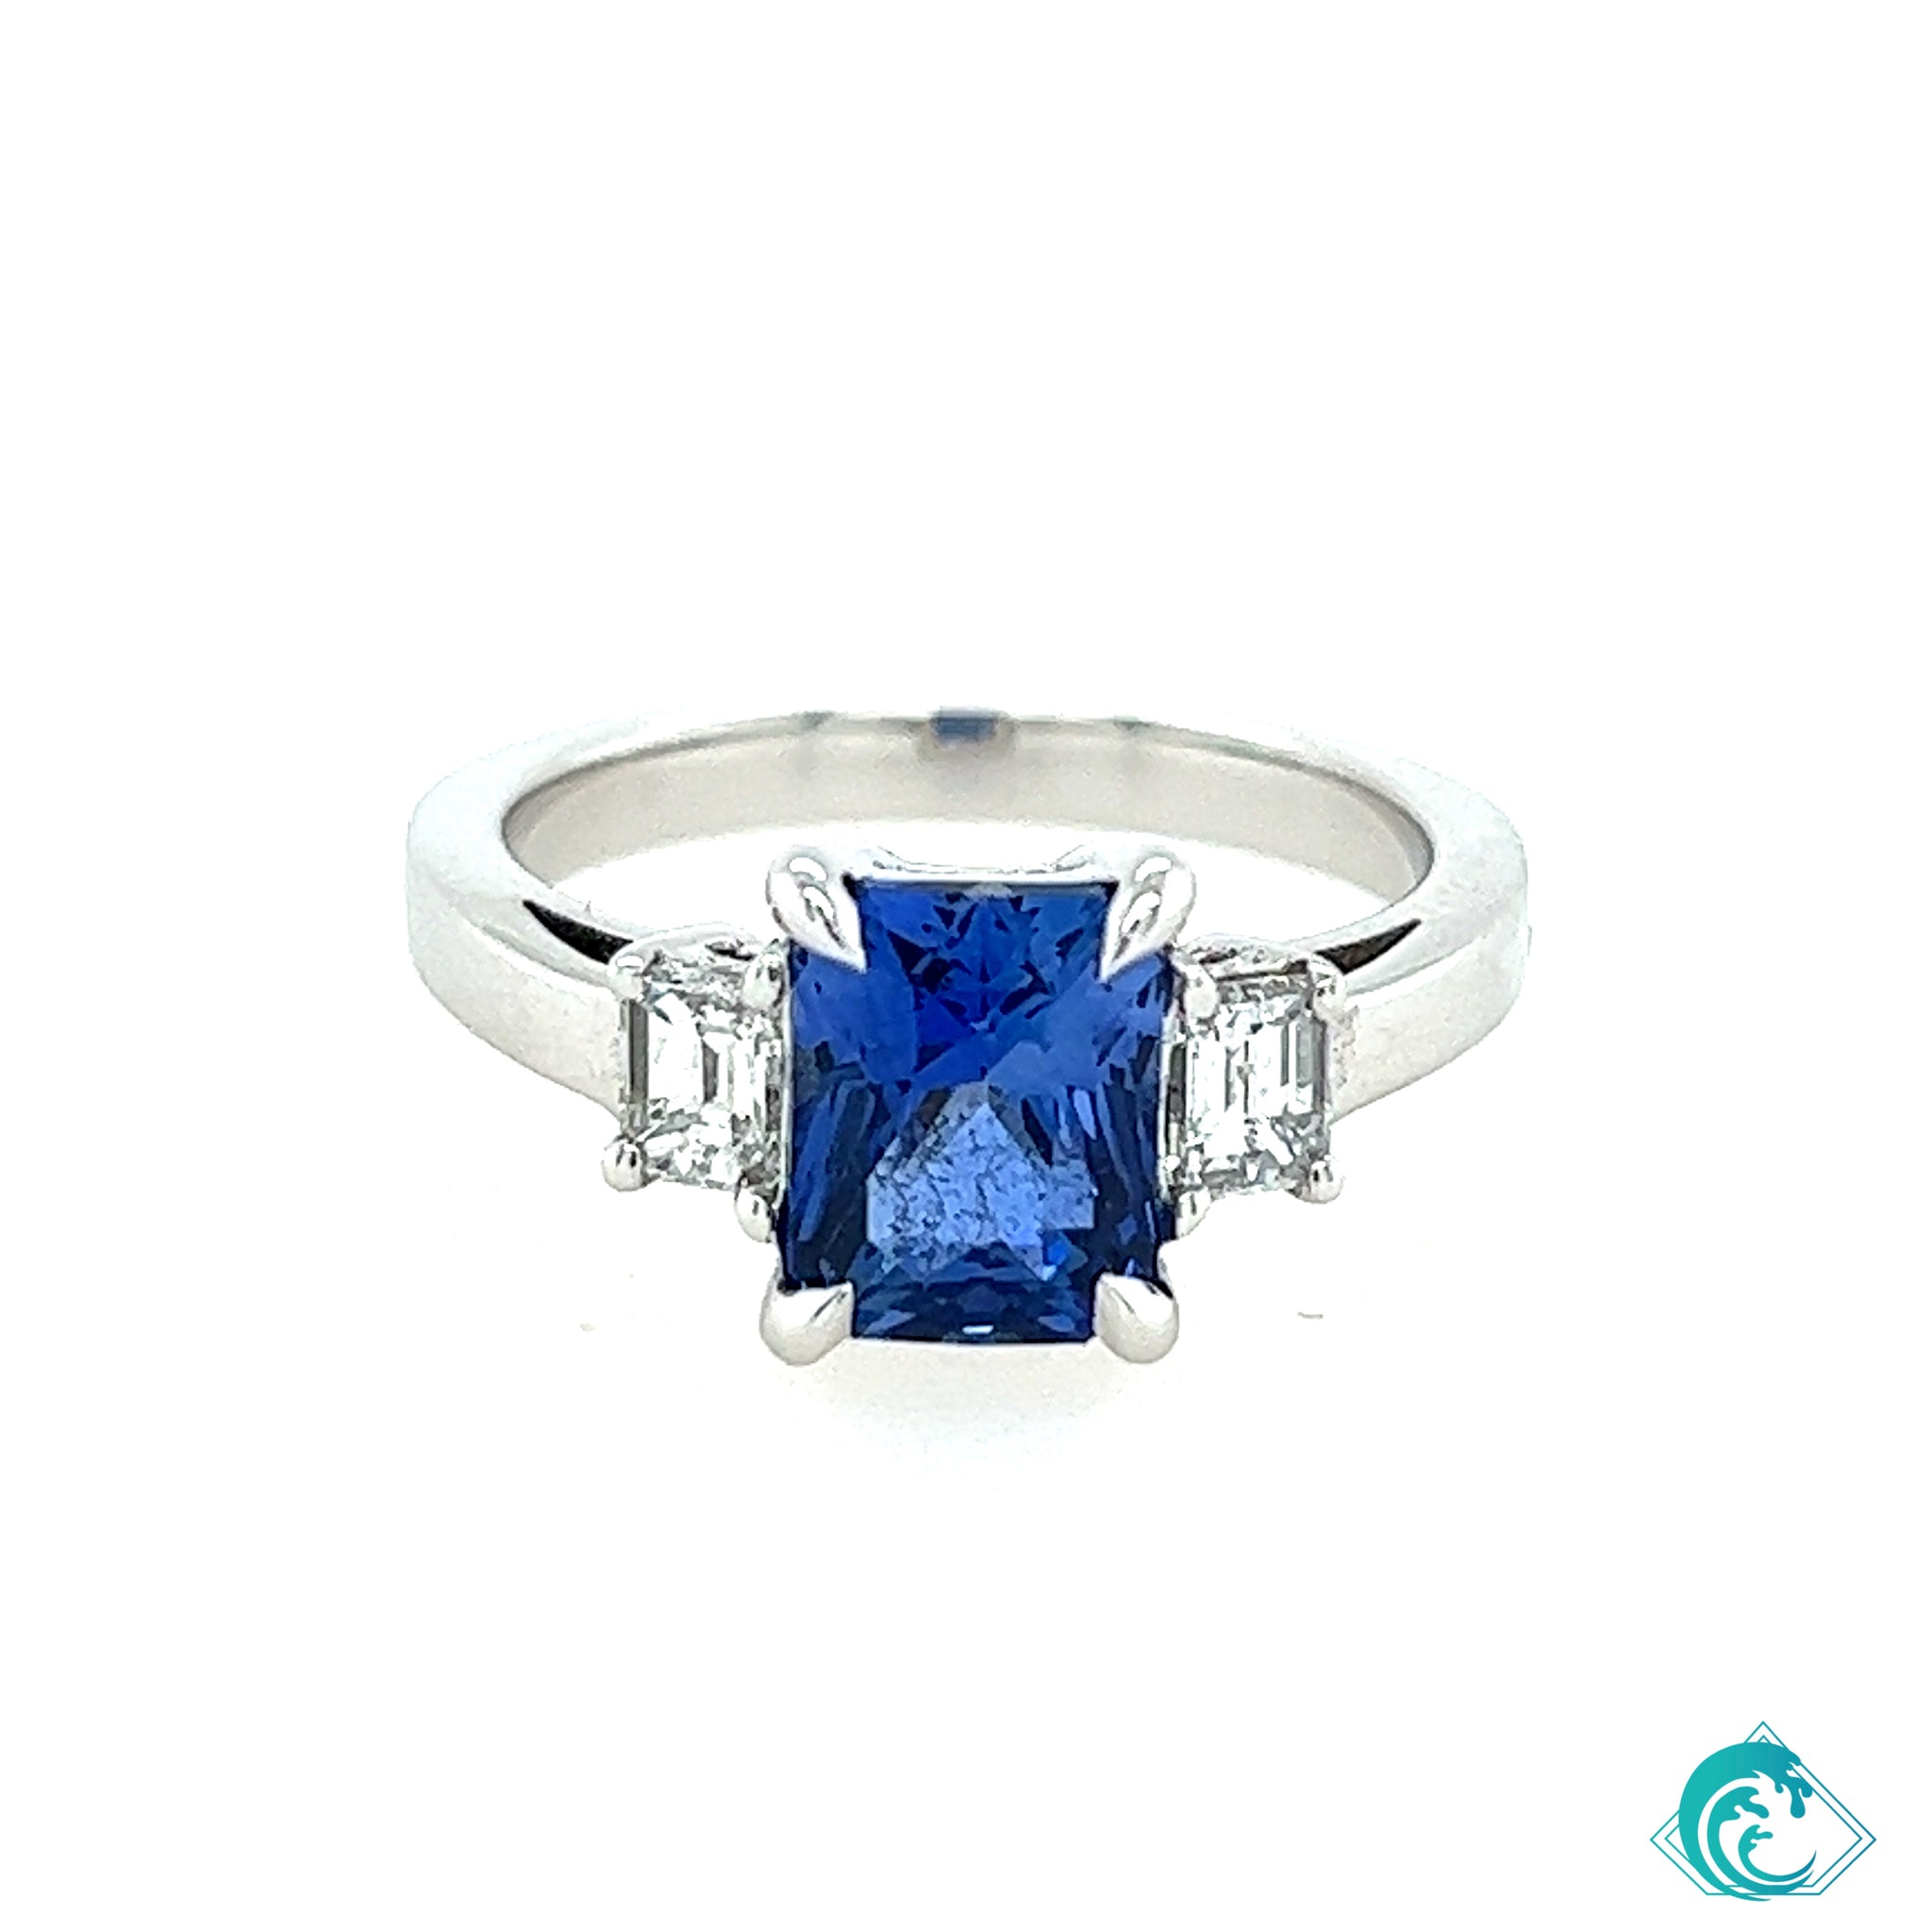 18KW Emerald Cut Diamond and Sapphire Ring